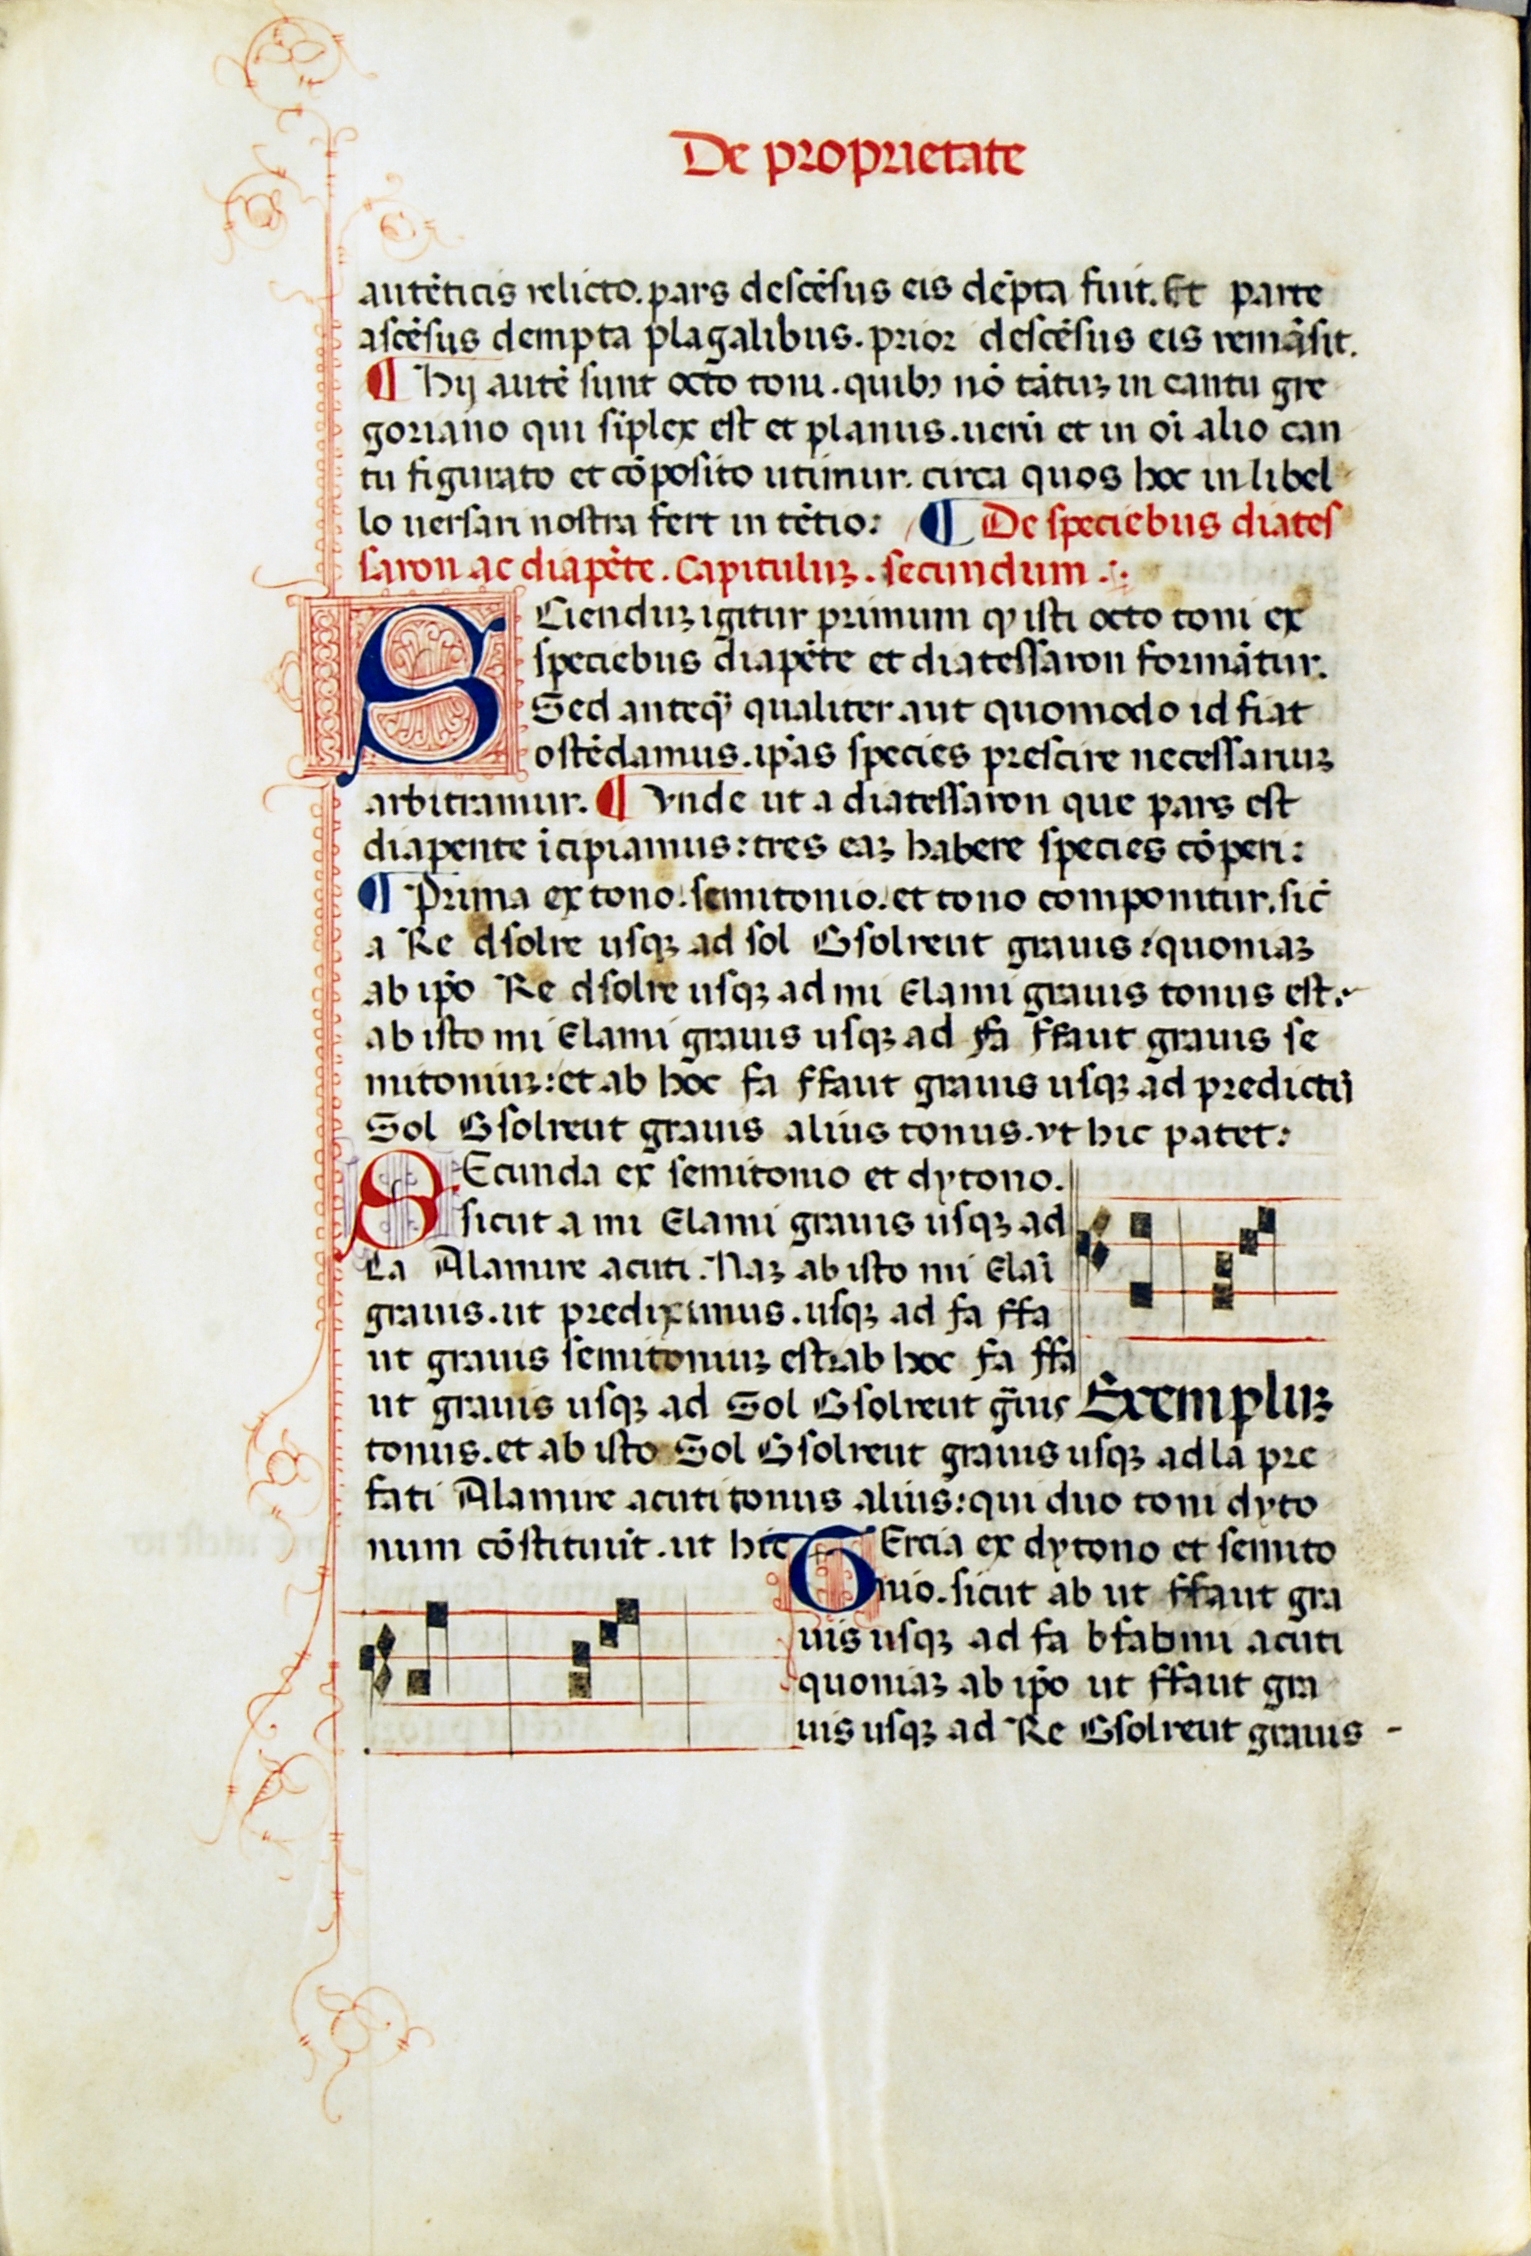 Bologna, Biblioteca Universitaria, MS 2573, fol. 22v. Source: Biblioteca Universitaria, Bologna.